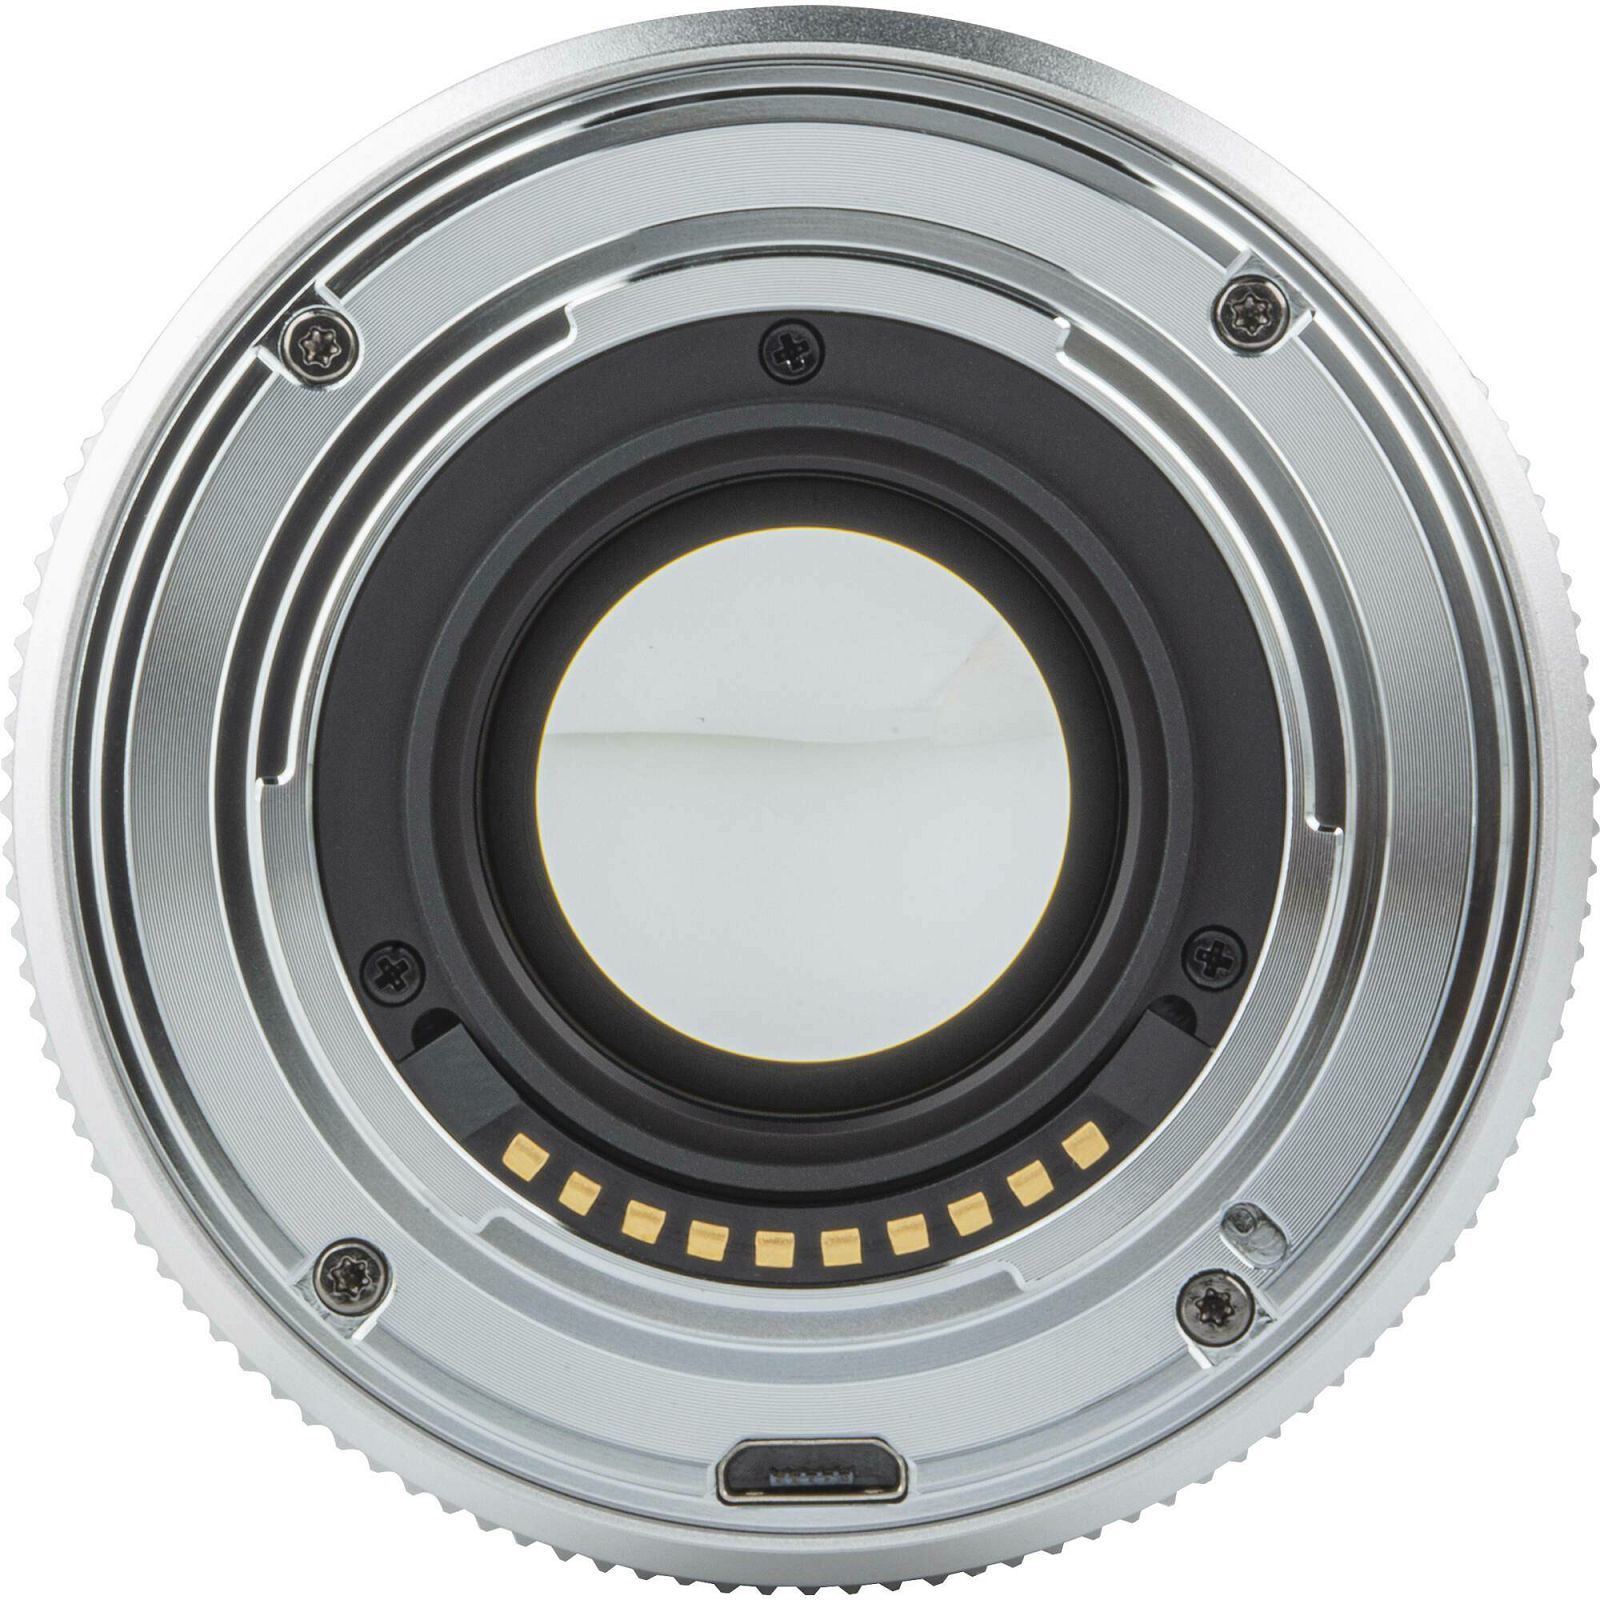 Viltrox AF 23mm f/1.4 XF Silver objektiv za Fujifilm X-mount (AF 23/1.4 XF S)